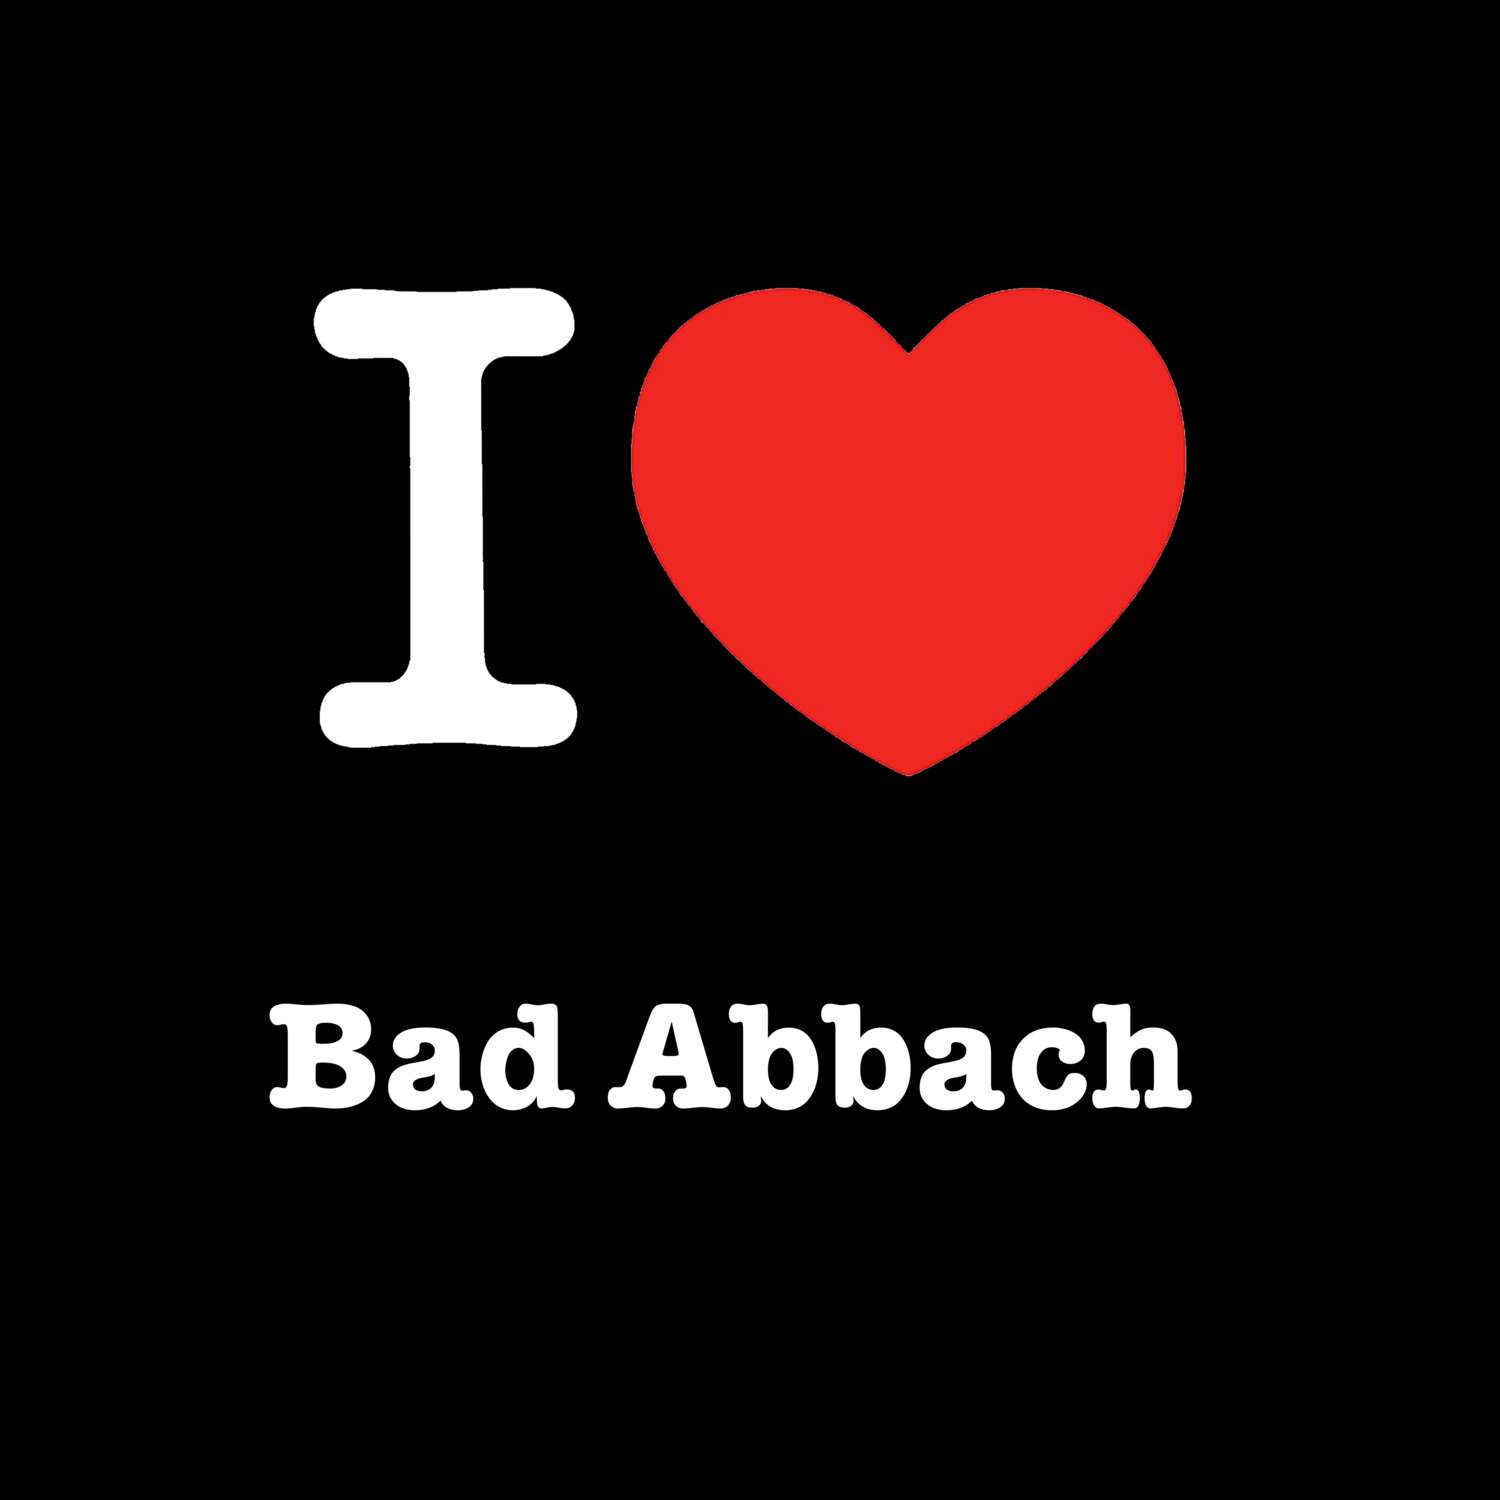 Bad Abbach T-Shirt »I love«